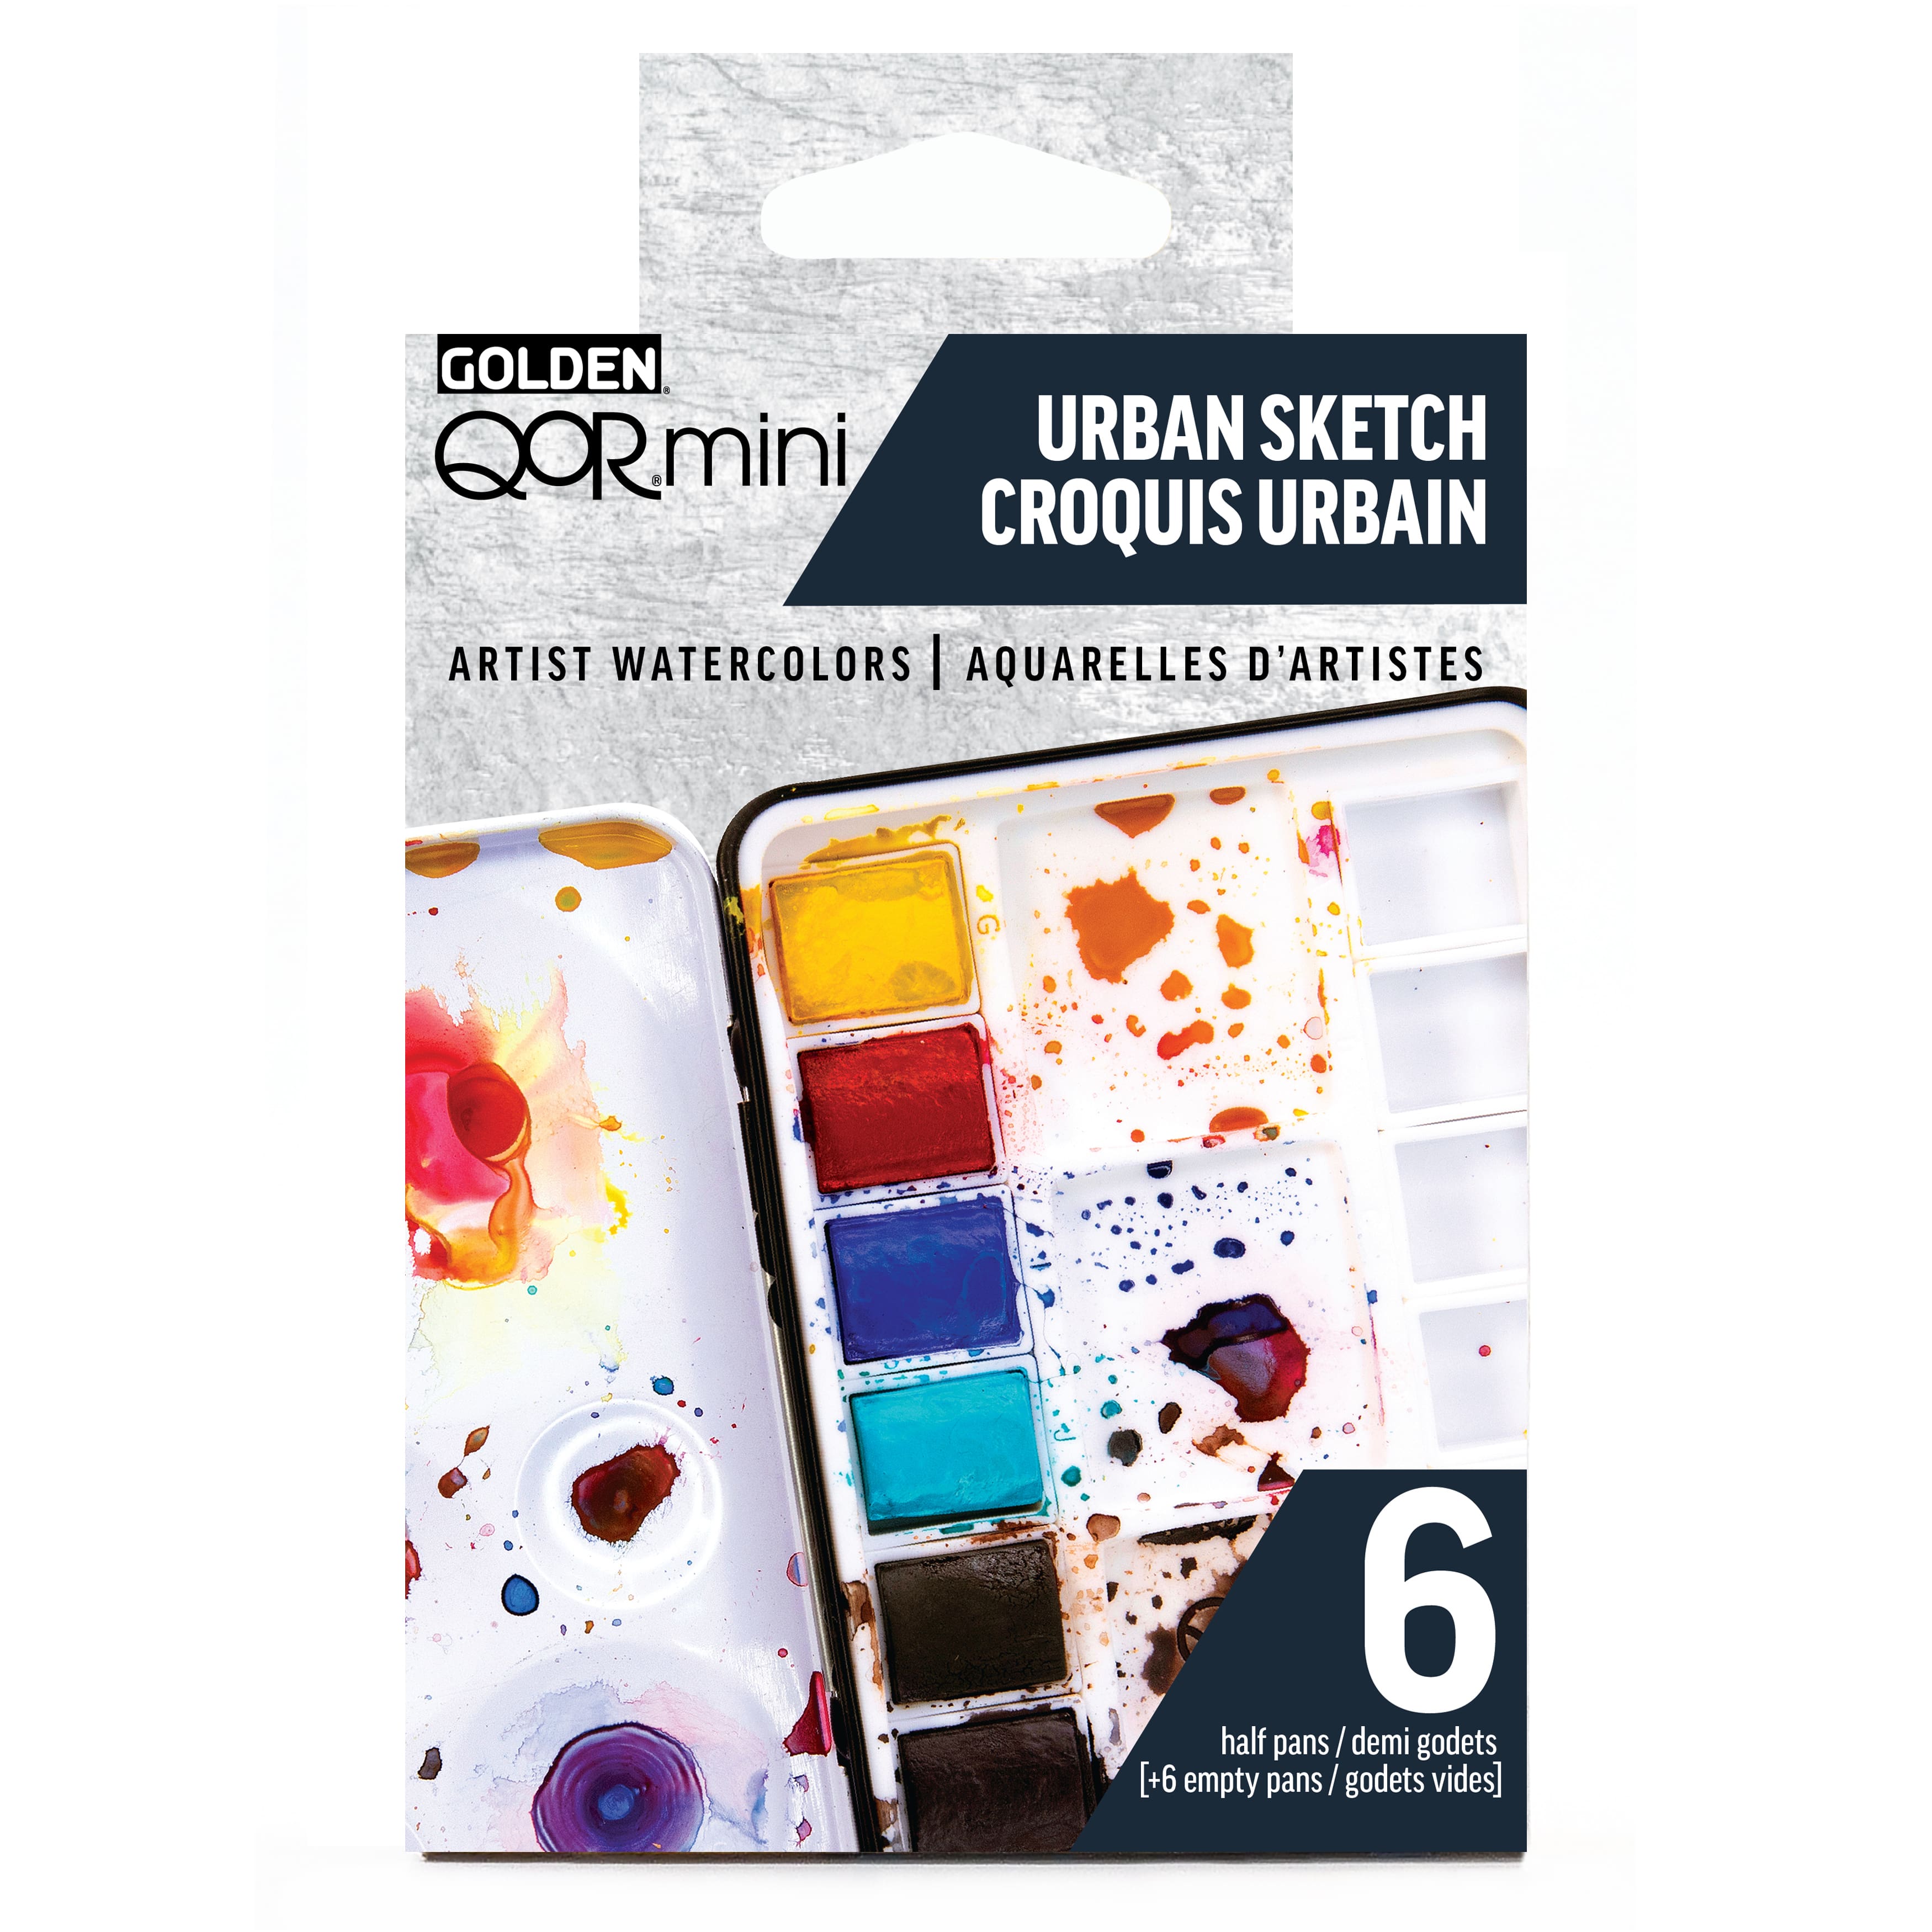 WORLD WATERCOLOR MONTH GIVEAWAY: QoR Mini Urban Sketch Watercolor  Palette! - $55 Value